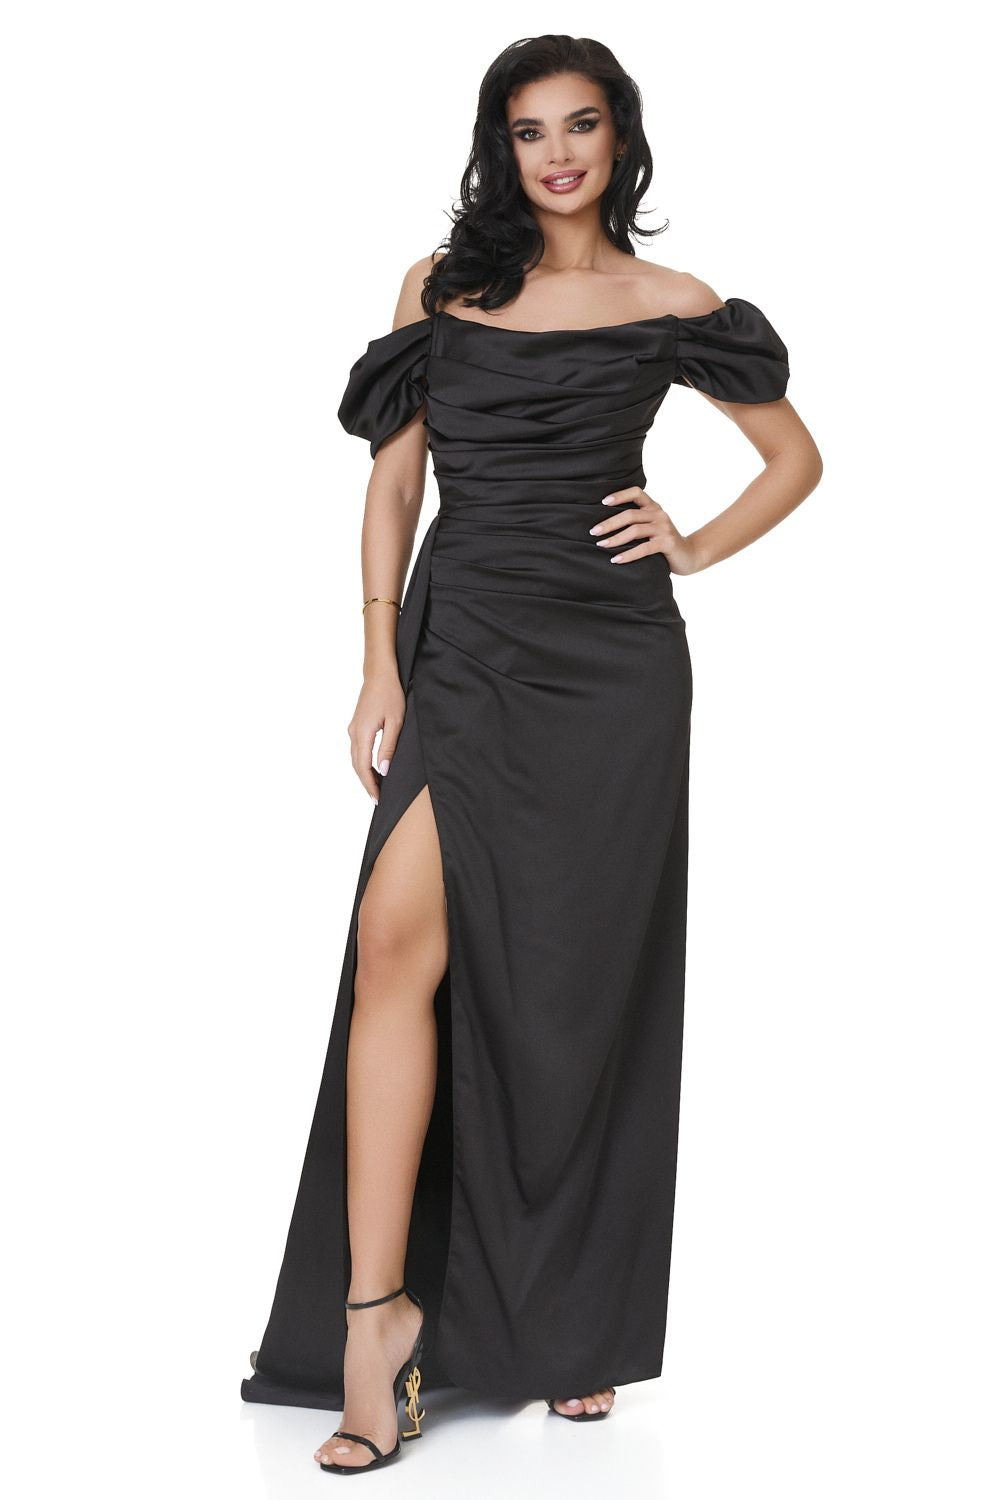 Serminisia Bogas long black dress for women